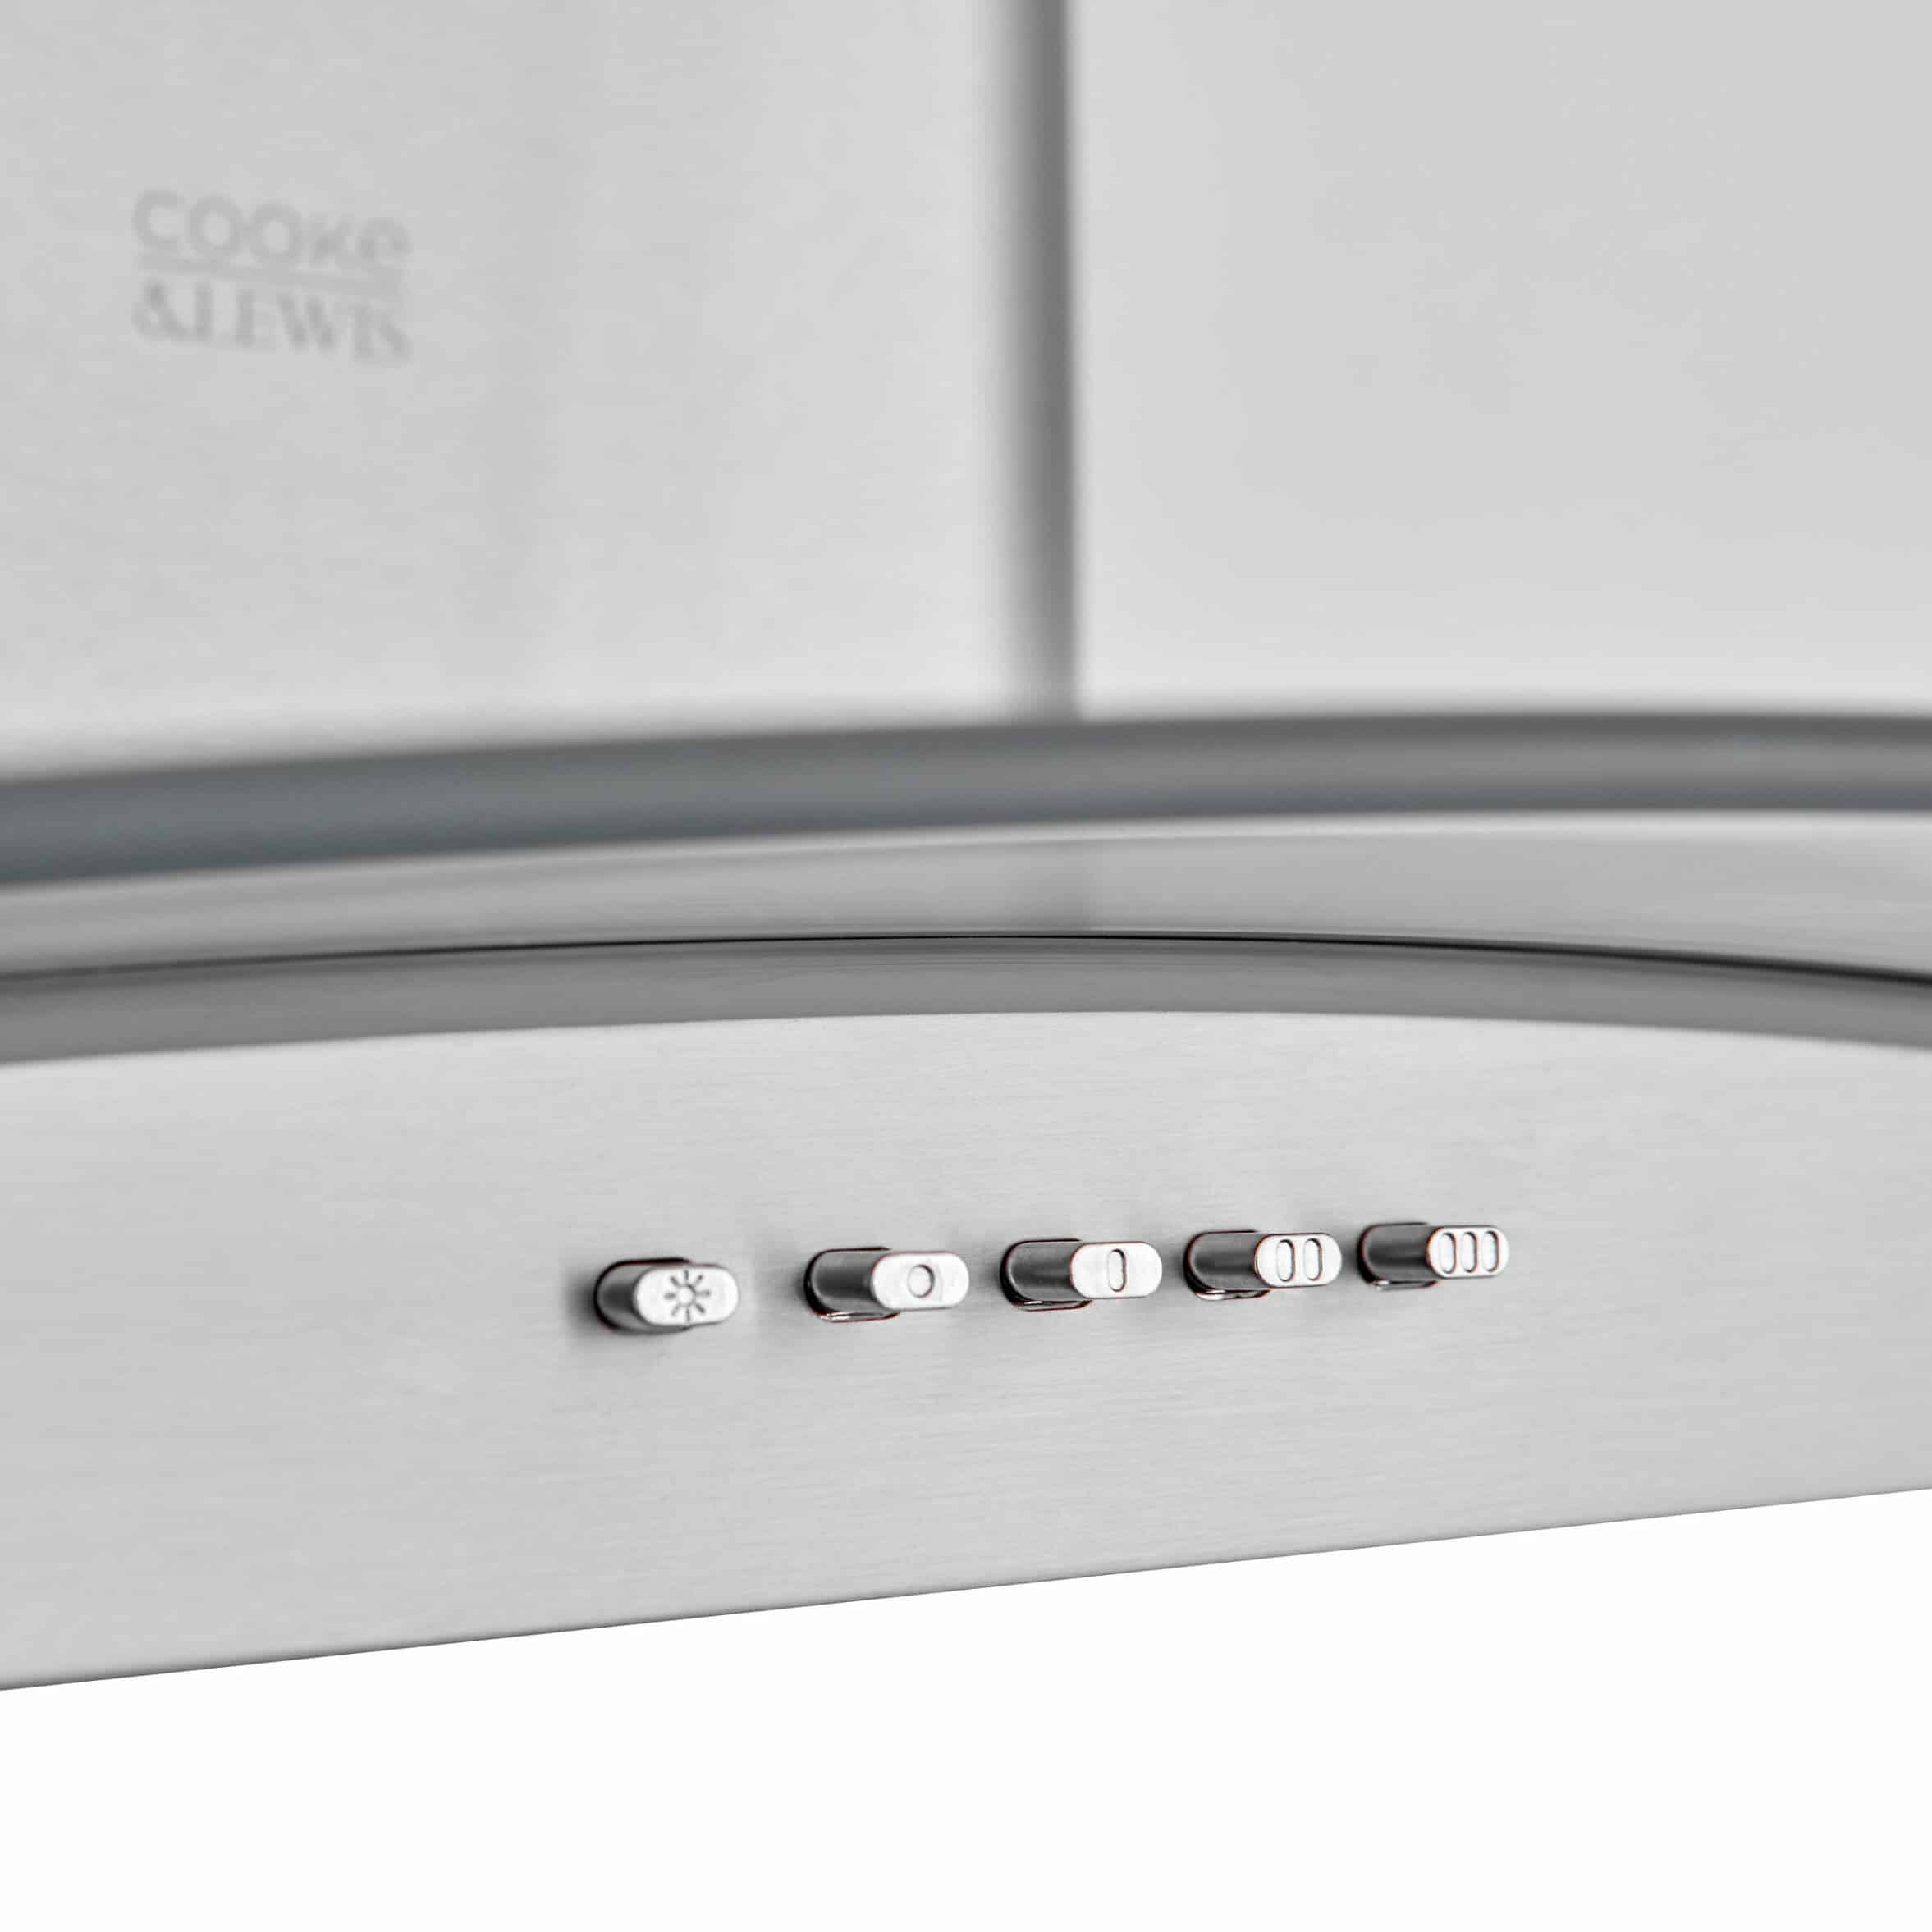 Cooke & Lewis CLCGS70 Inox Stainless steel Curved Cooker hood, (W)70cm 2774